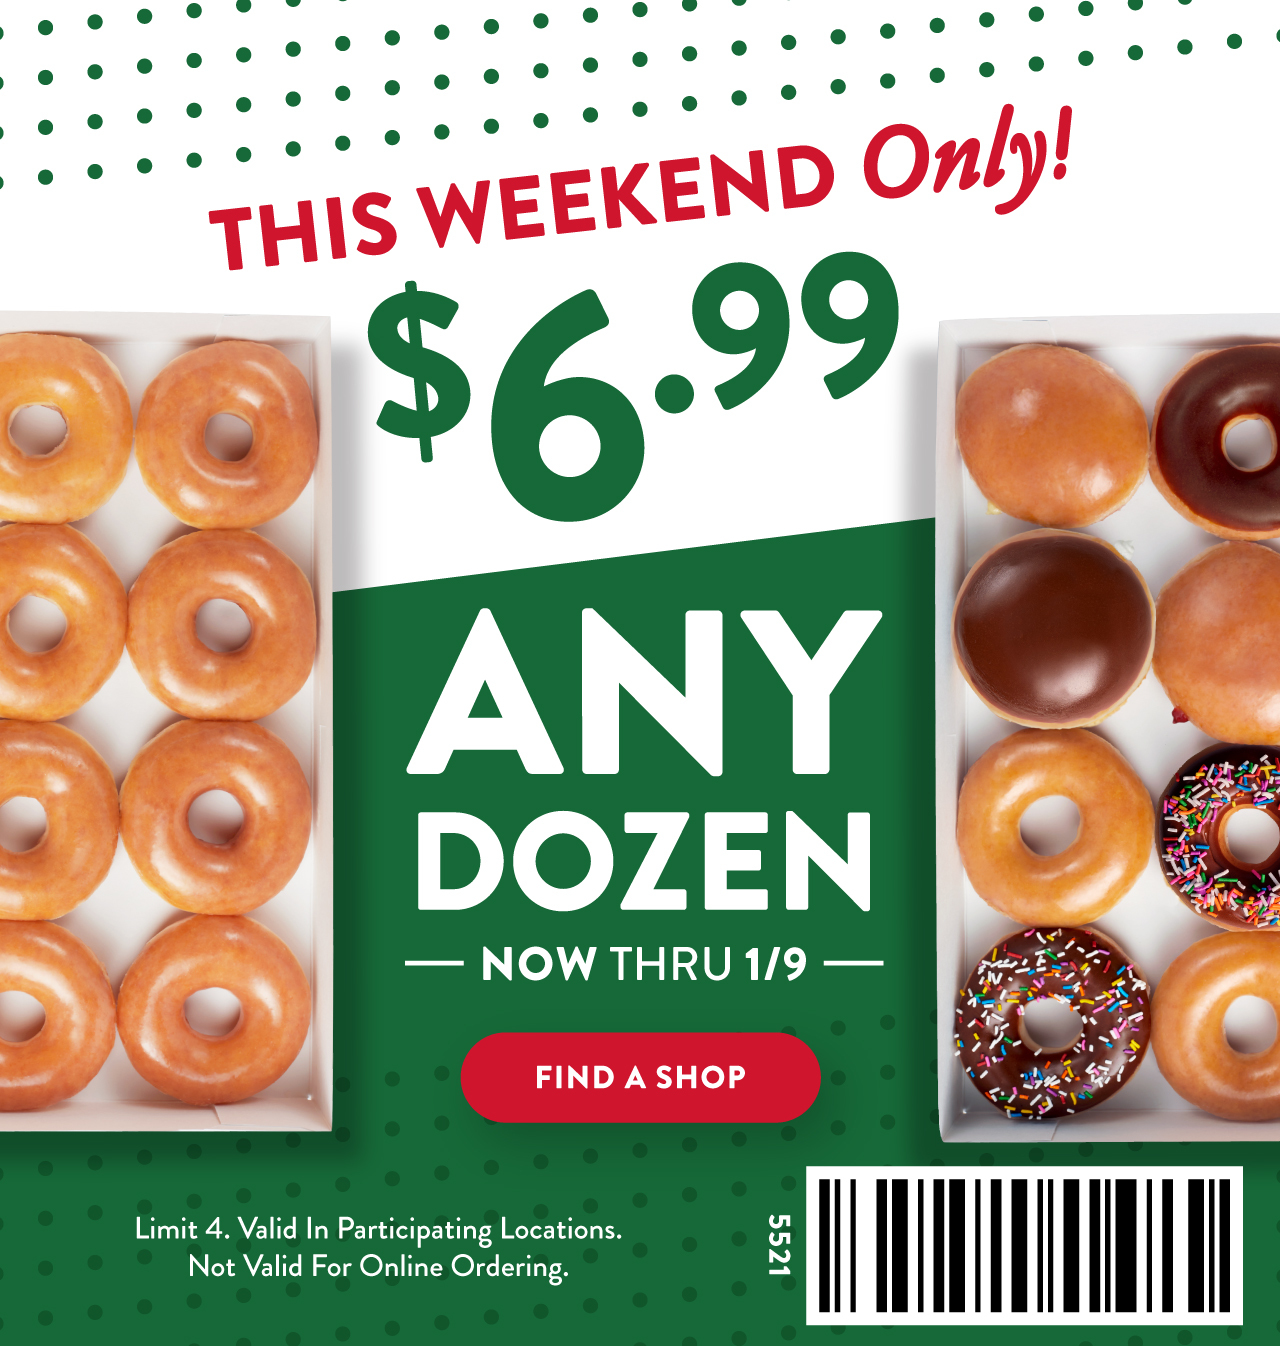 Select Krispy Kreme Locations: $6.99 Any Dozen w/ Coupon (Valid through 1/9)